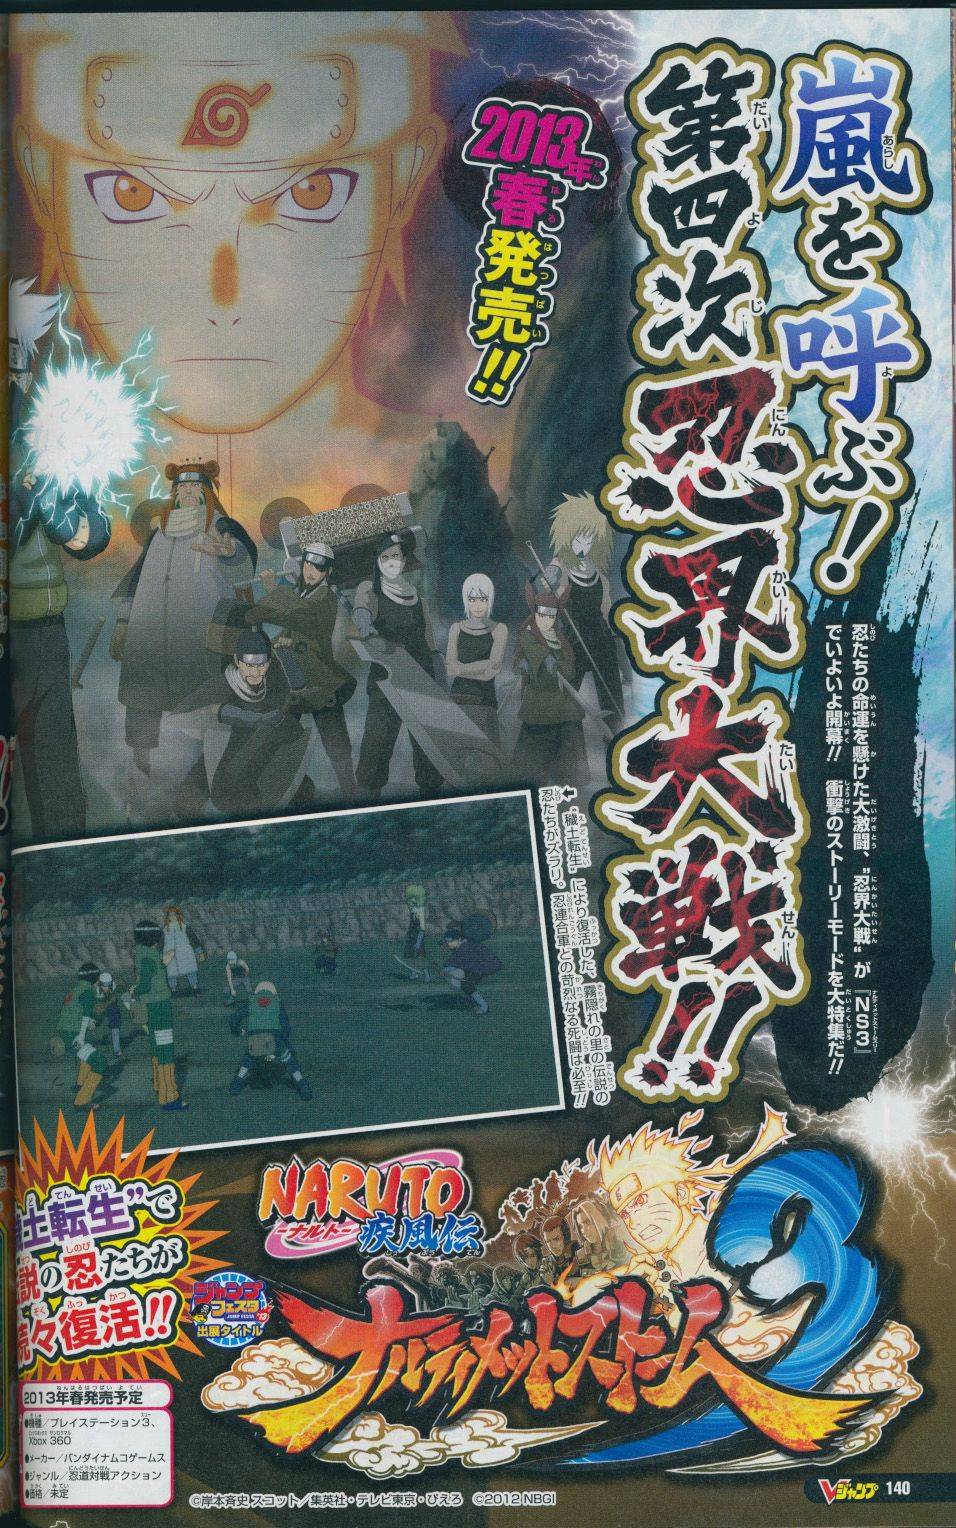  Naruto Shippuden Ultimate Ninja Storm 3 scan V Jump 1